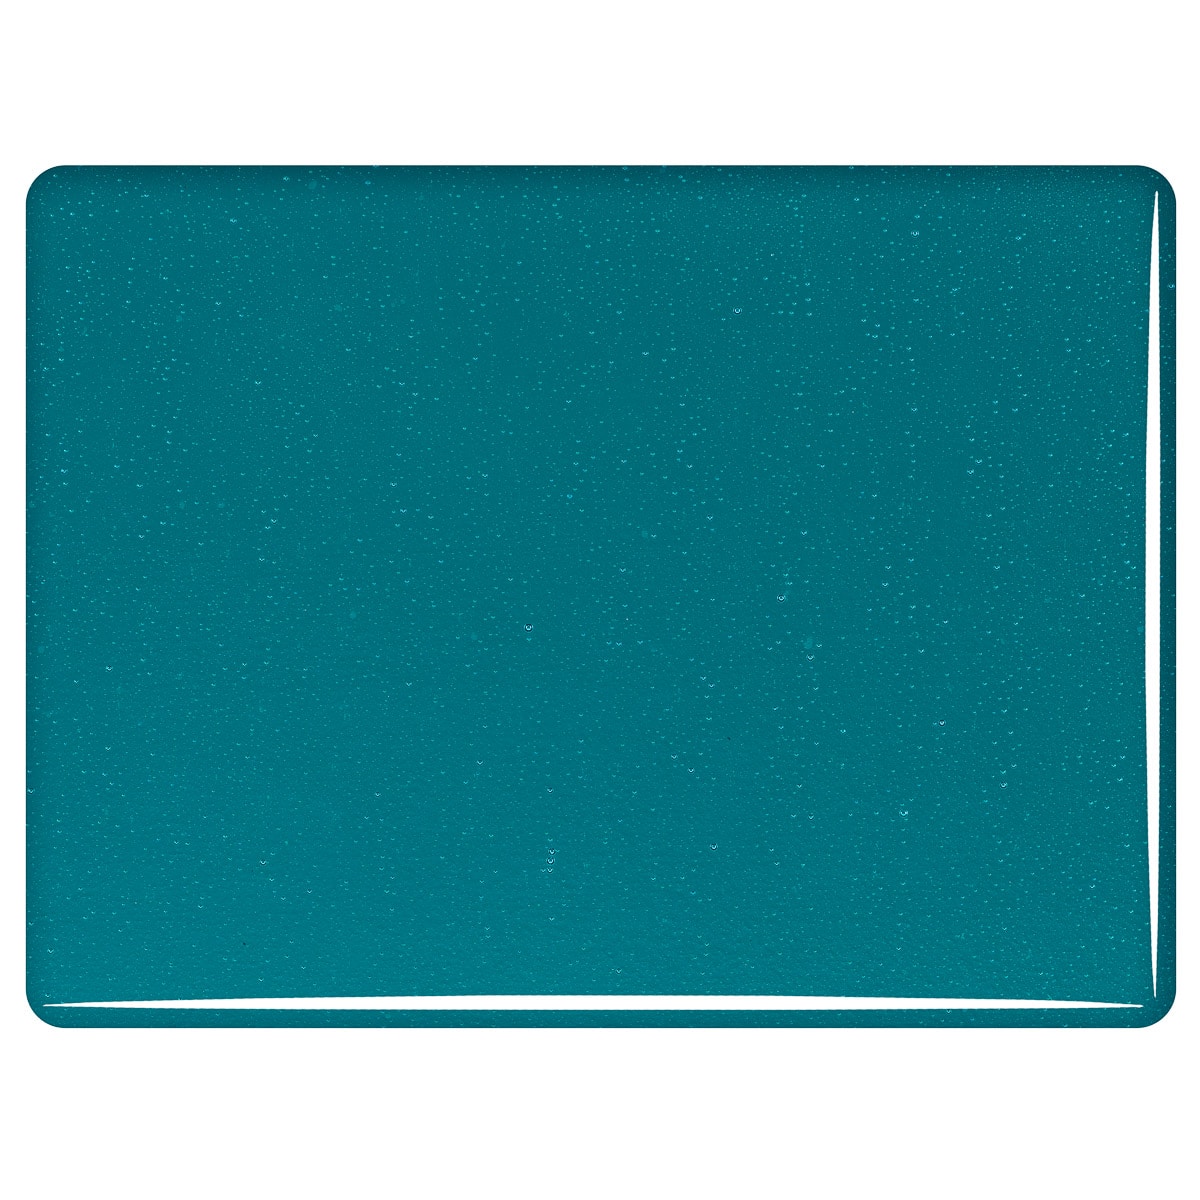 001176 Peacock Blue Transparent sheet glass swatch